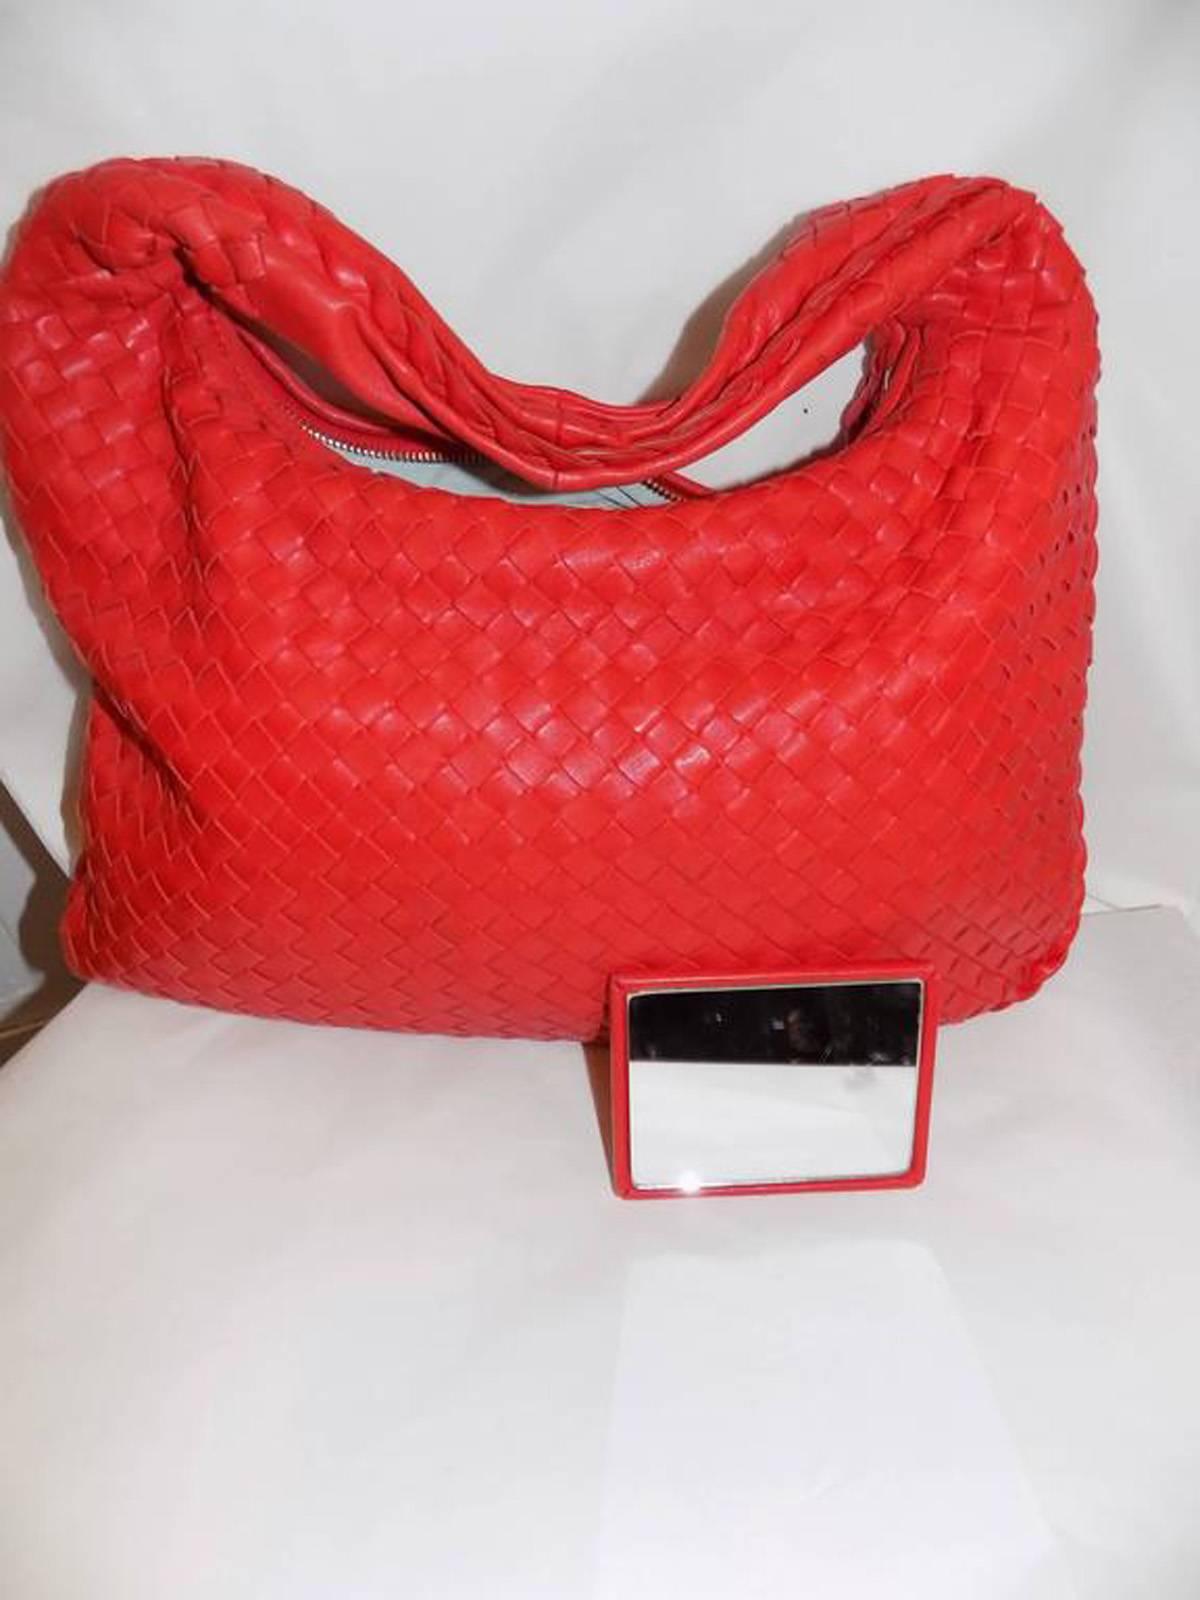 Orange  Woven Leather  Intrecciato Bottega Veneta Hobo Shoulder Bag For Sale 1